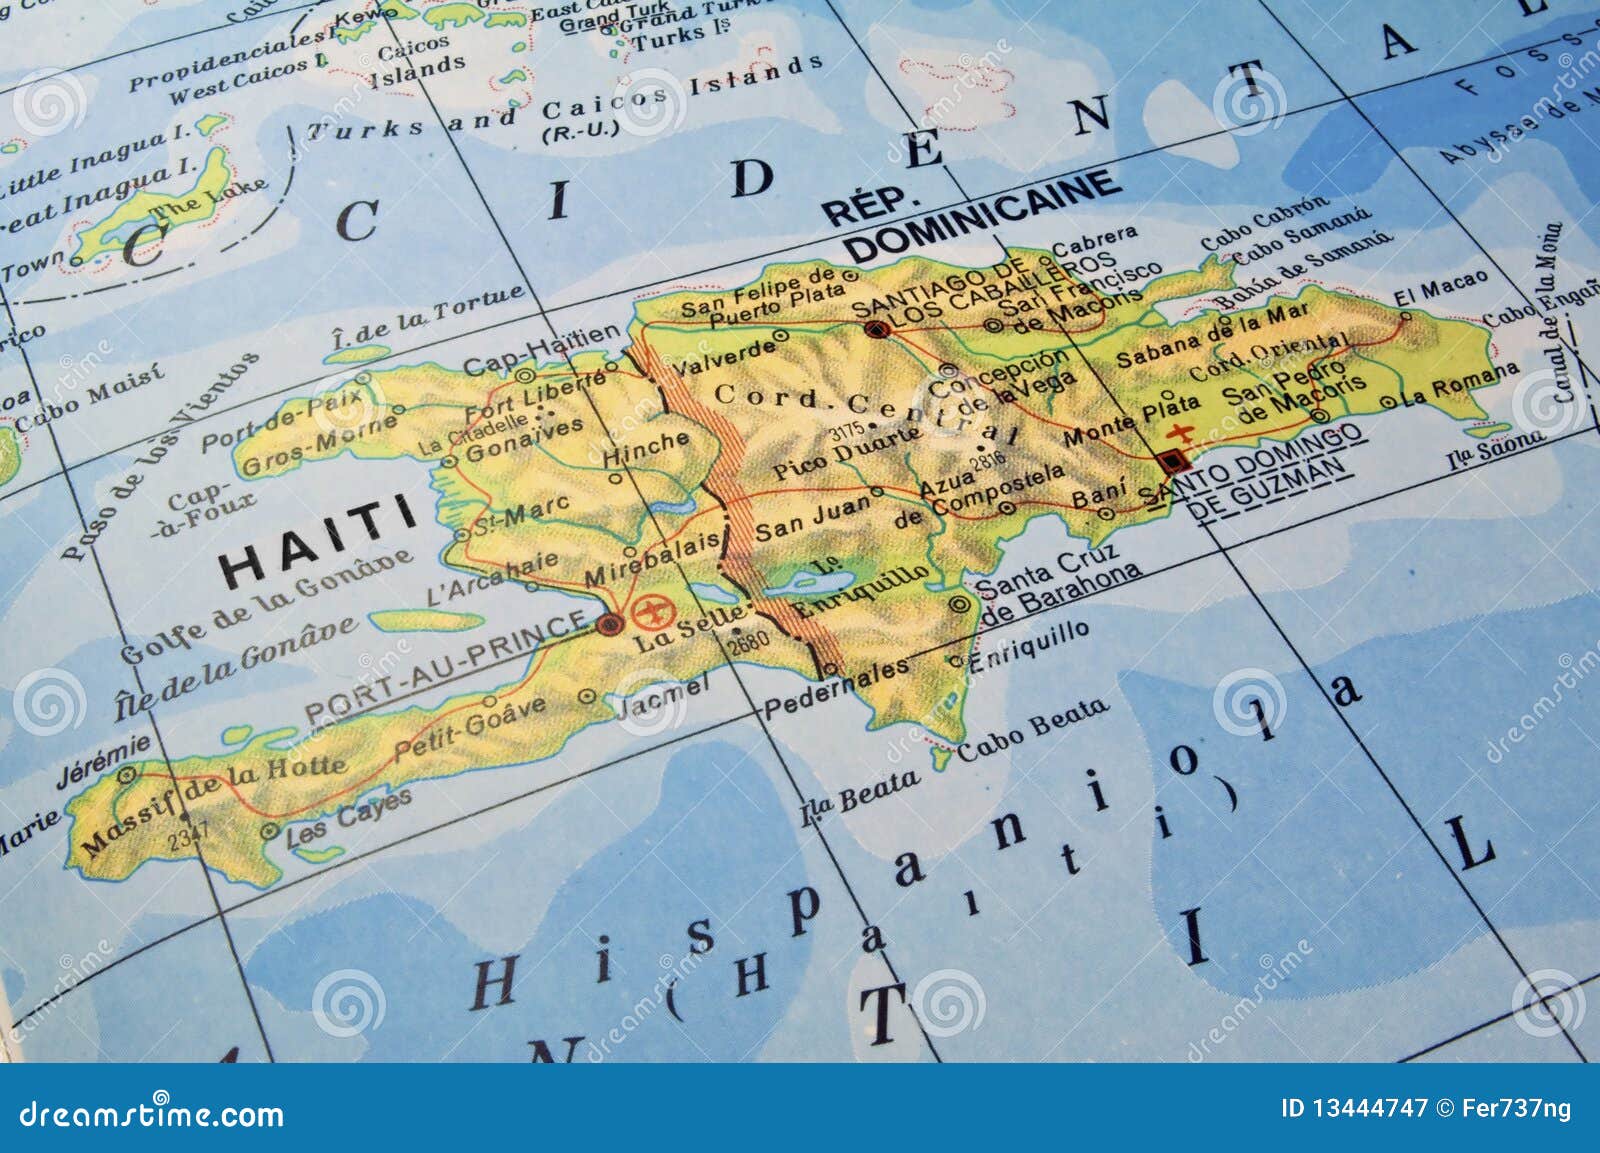 dominican republic, haiti map.